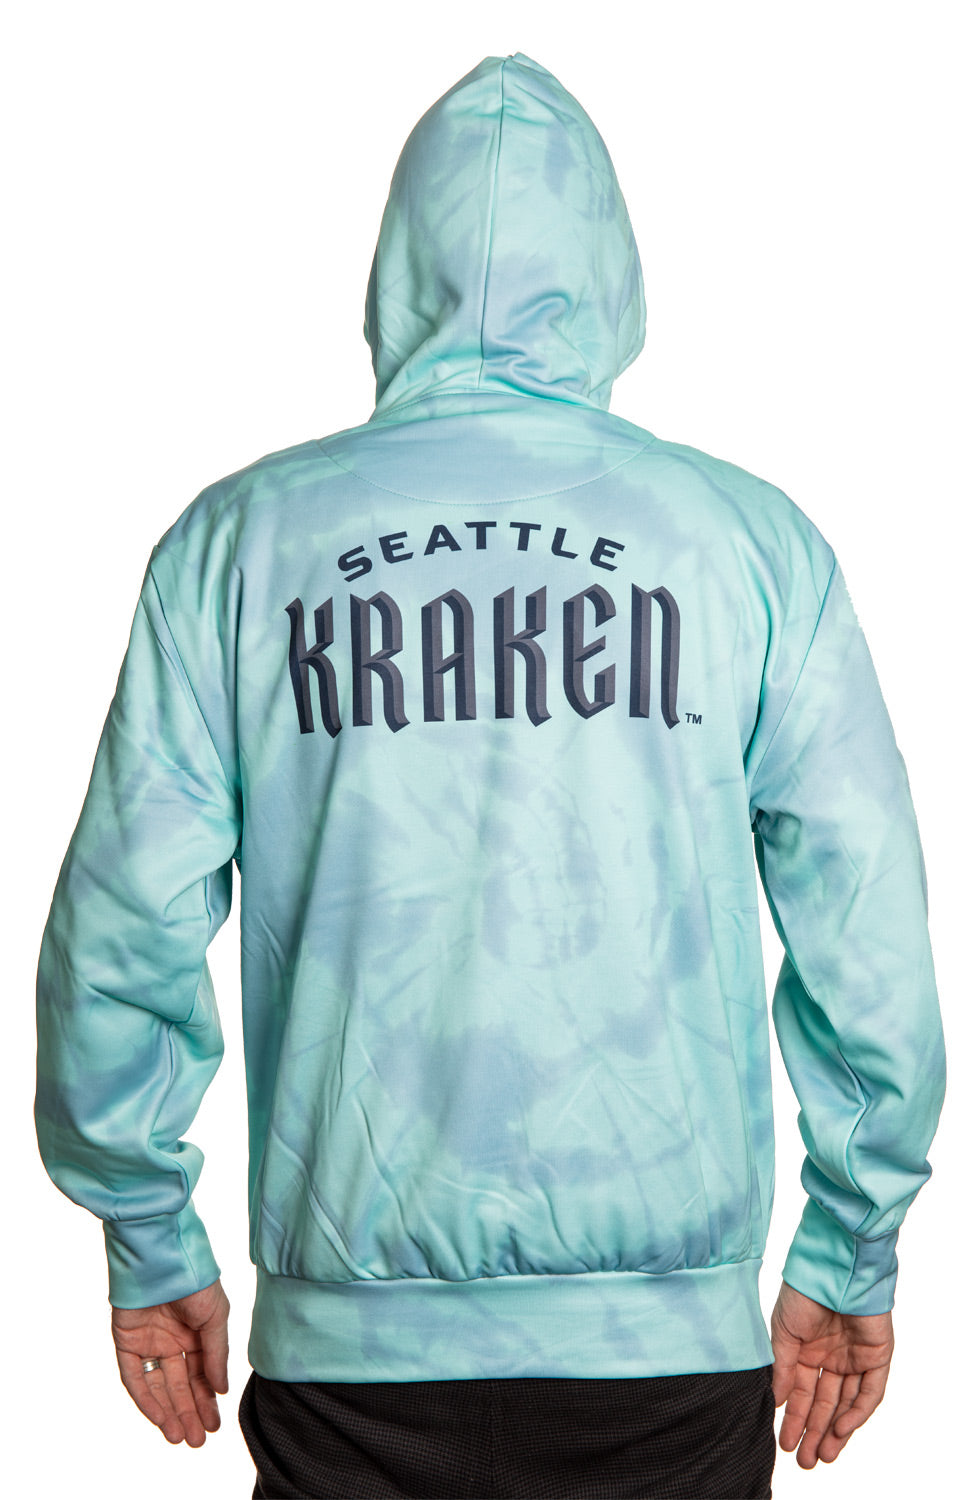 Seattle Kraken Premium Apparel and Leisurewear